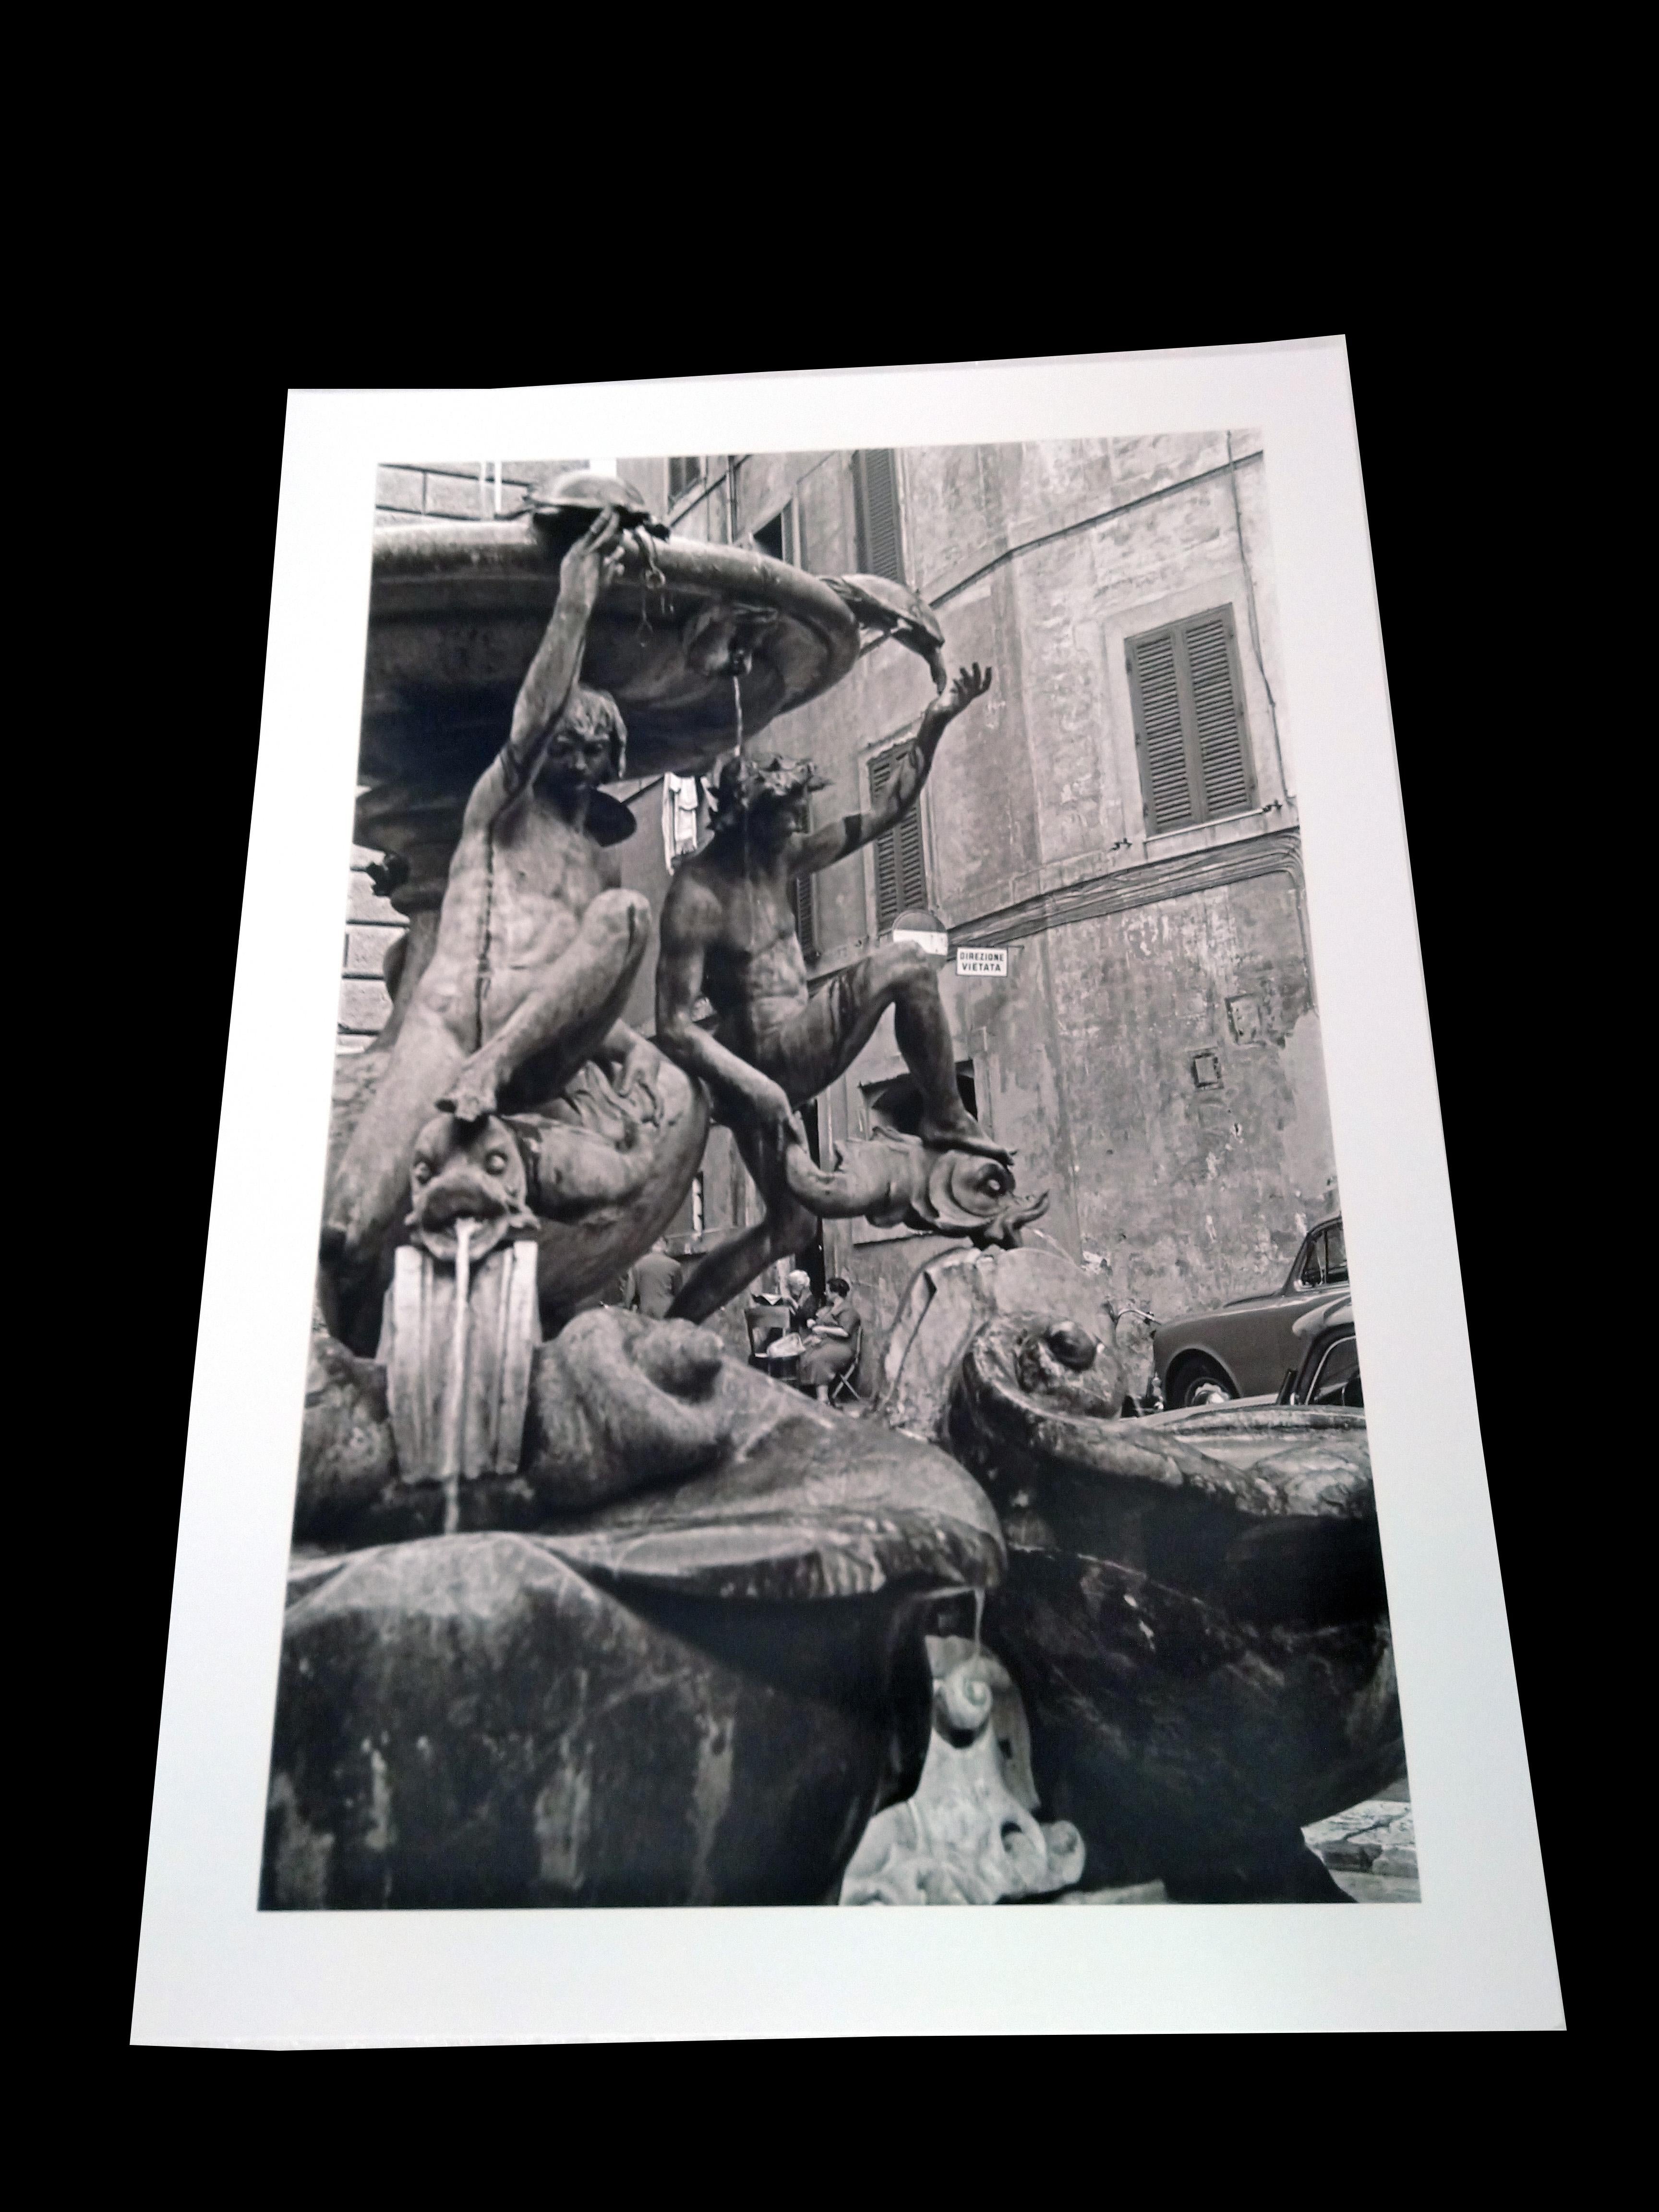 Chiacchiere in piazza, 1956 - Roma - Contemporary Black & White Photography - Gray Black and White Photograph by Fabrizio La Torre